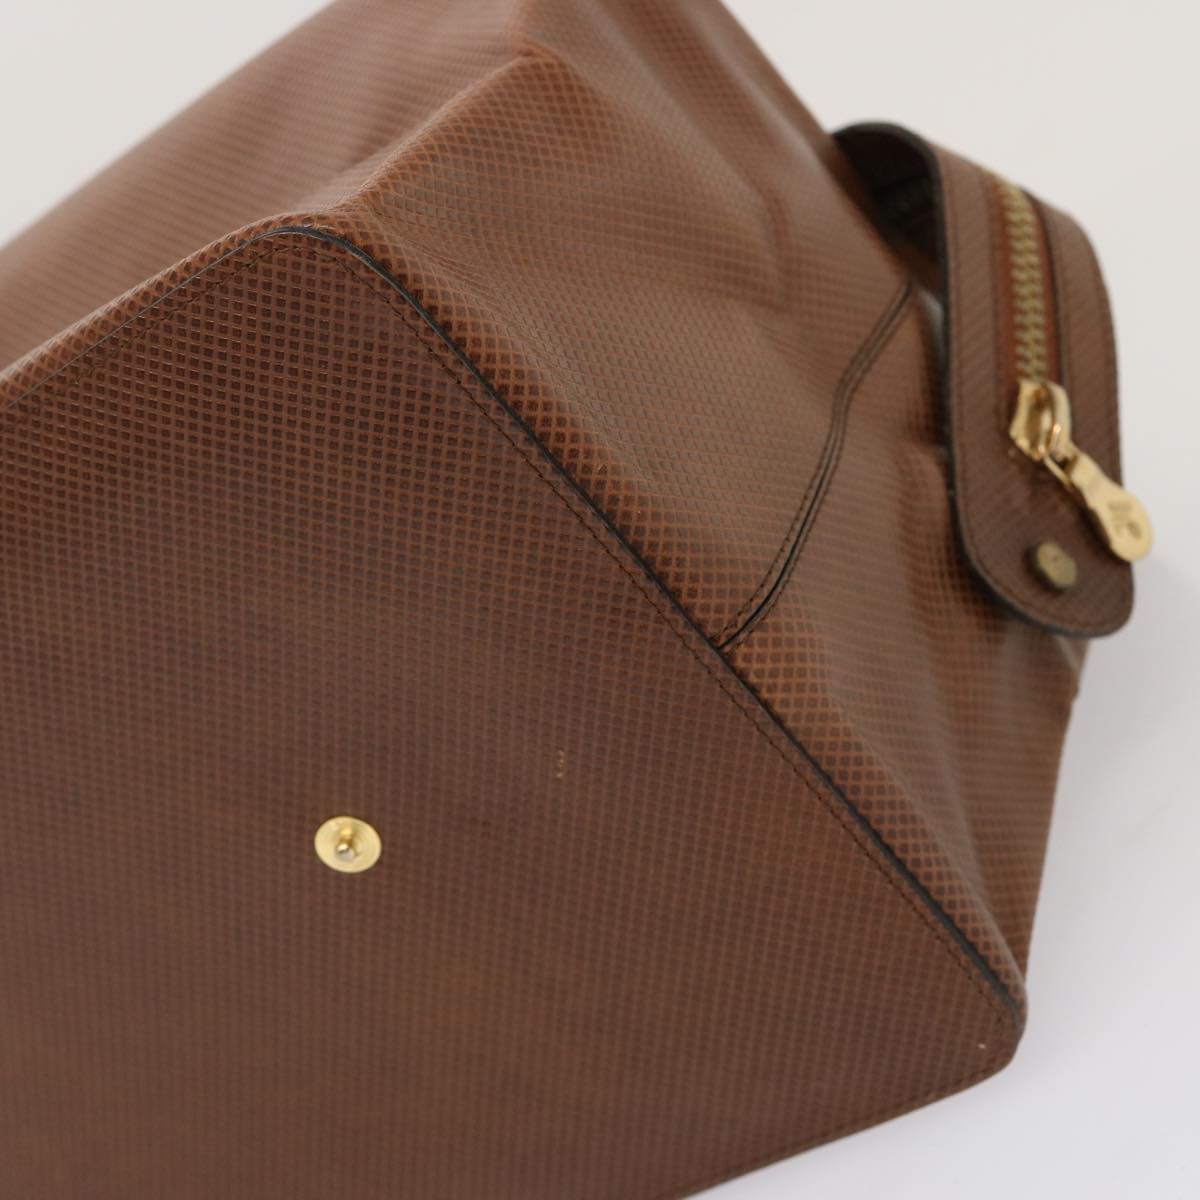 BOTTEGAVENETA Pouch Hand Bag Nylon Leather 3Set Brown Black Auth bs13471